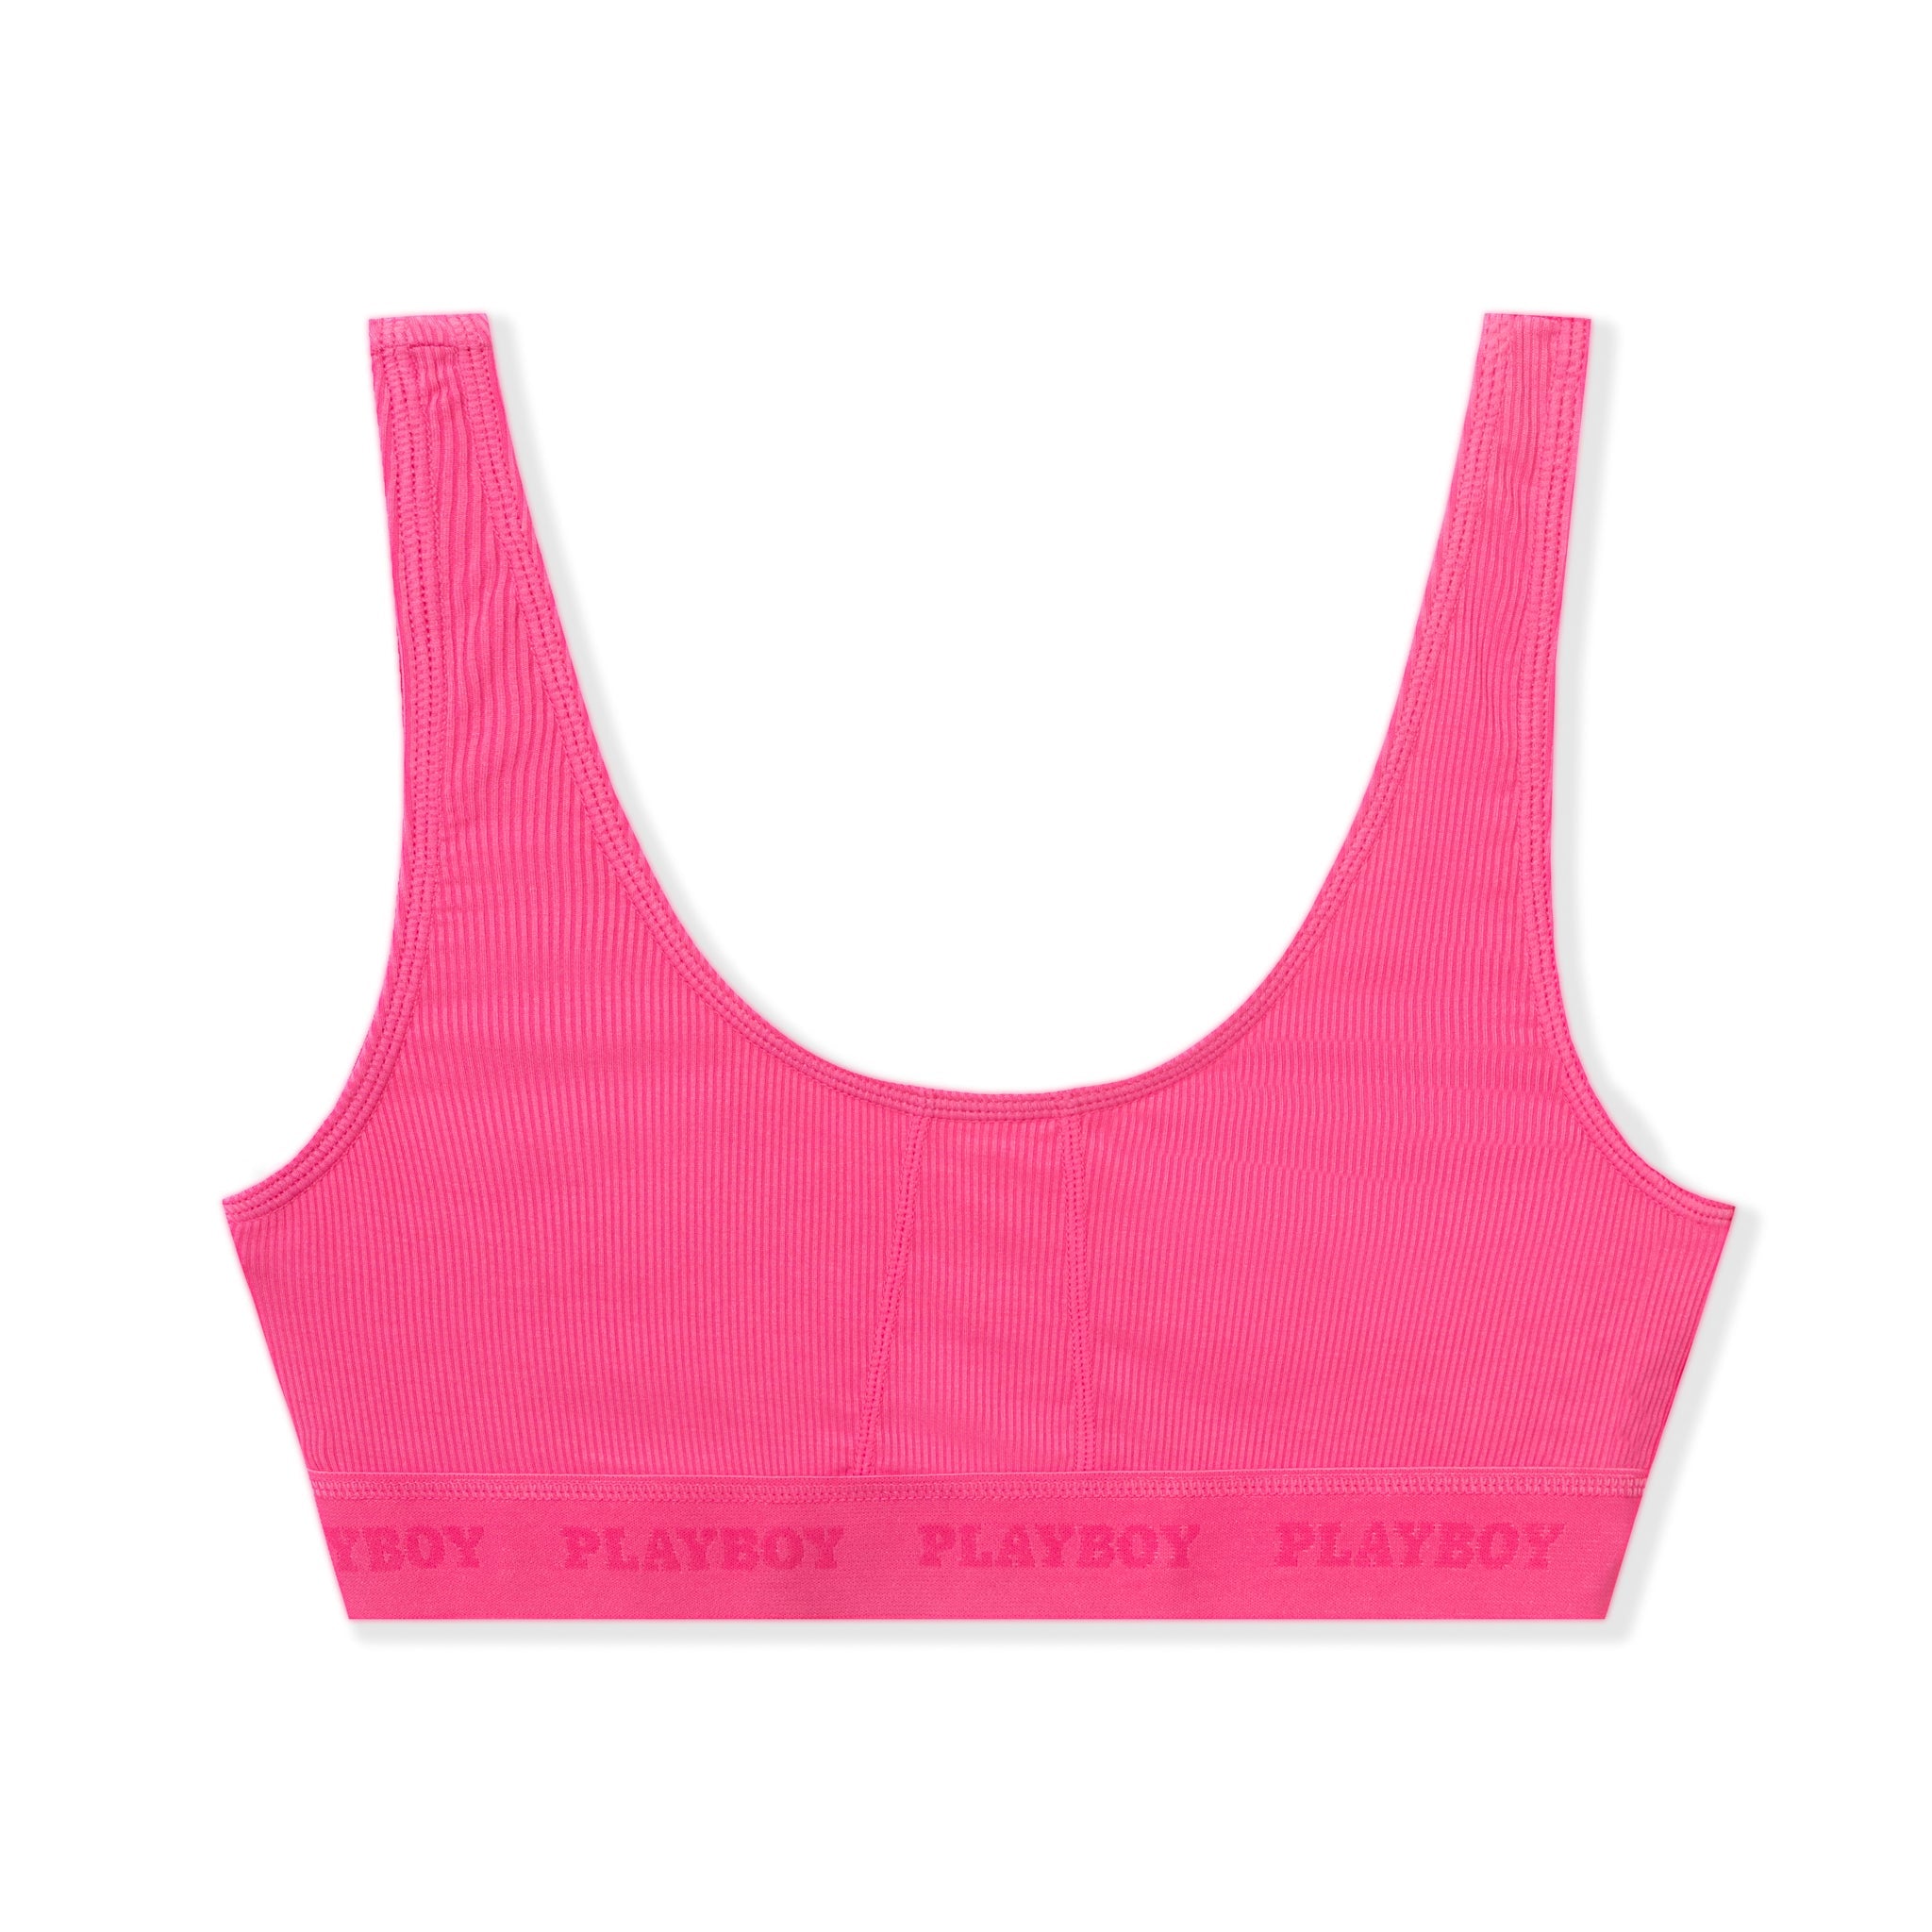 Buy XOXO women 2packs ribbed seamless crop top sports bra pink Online